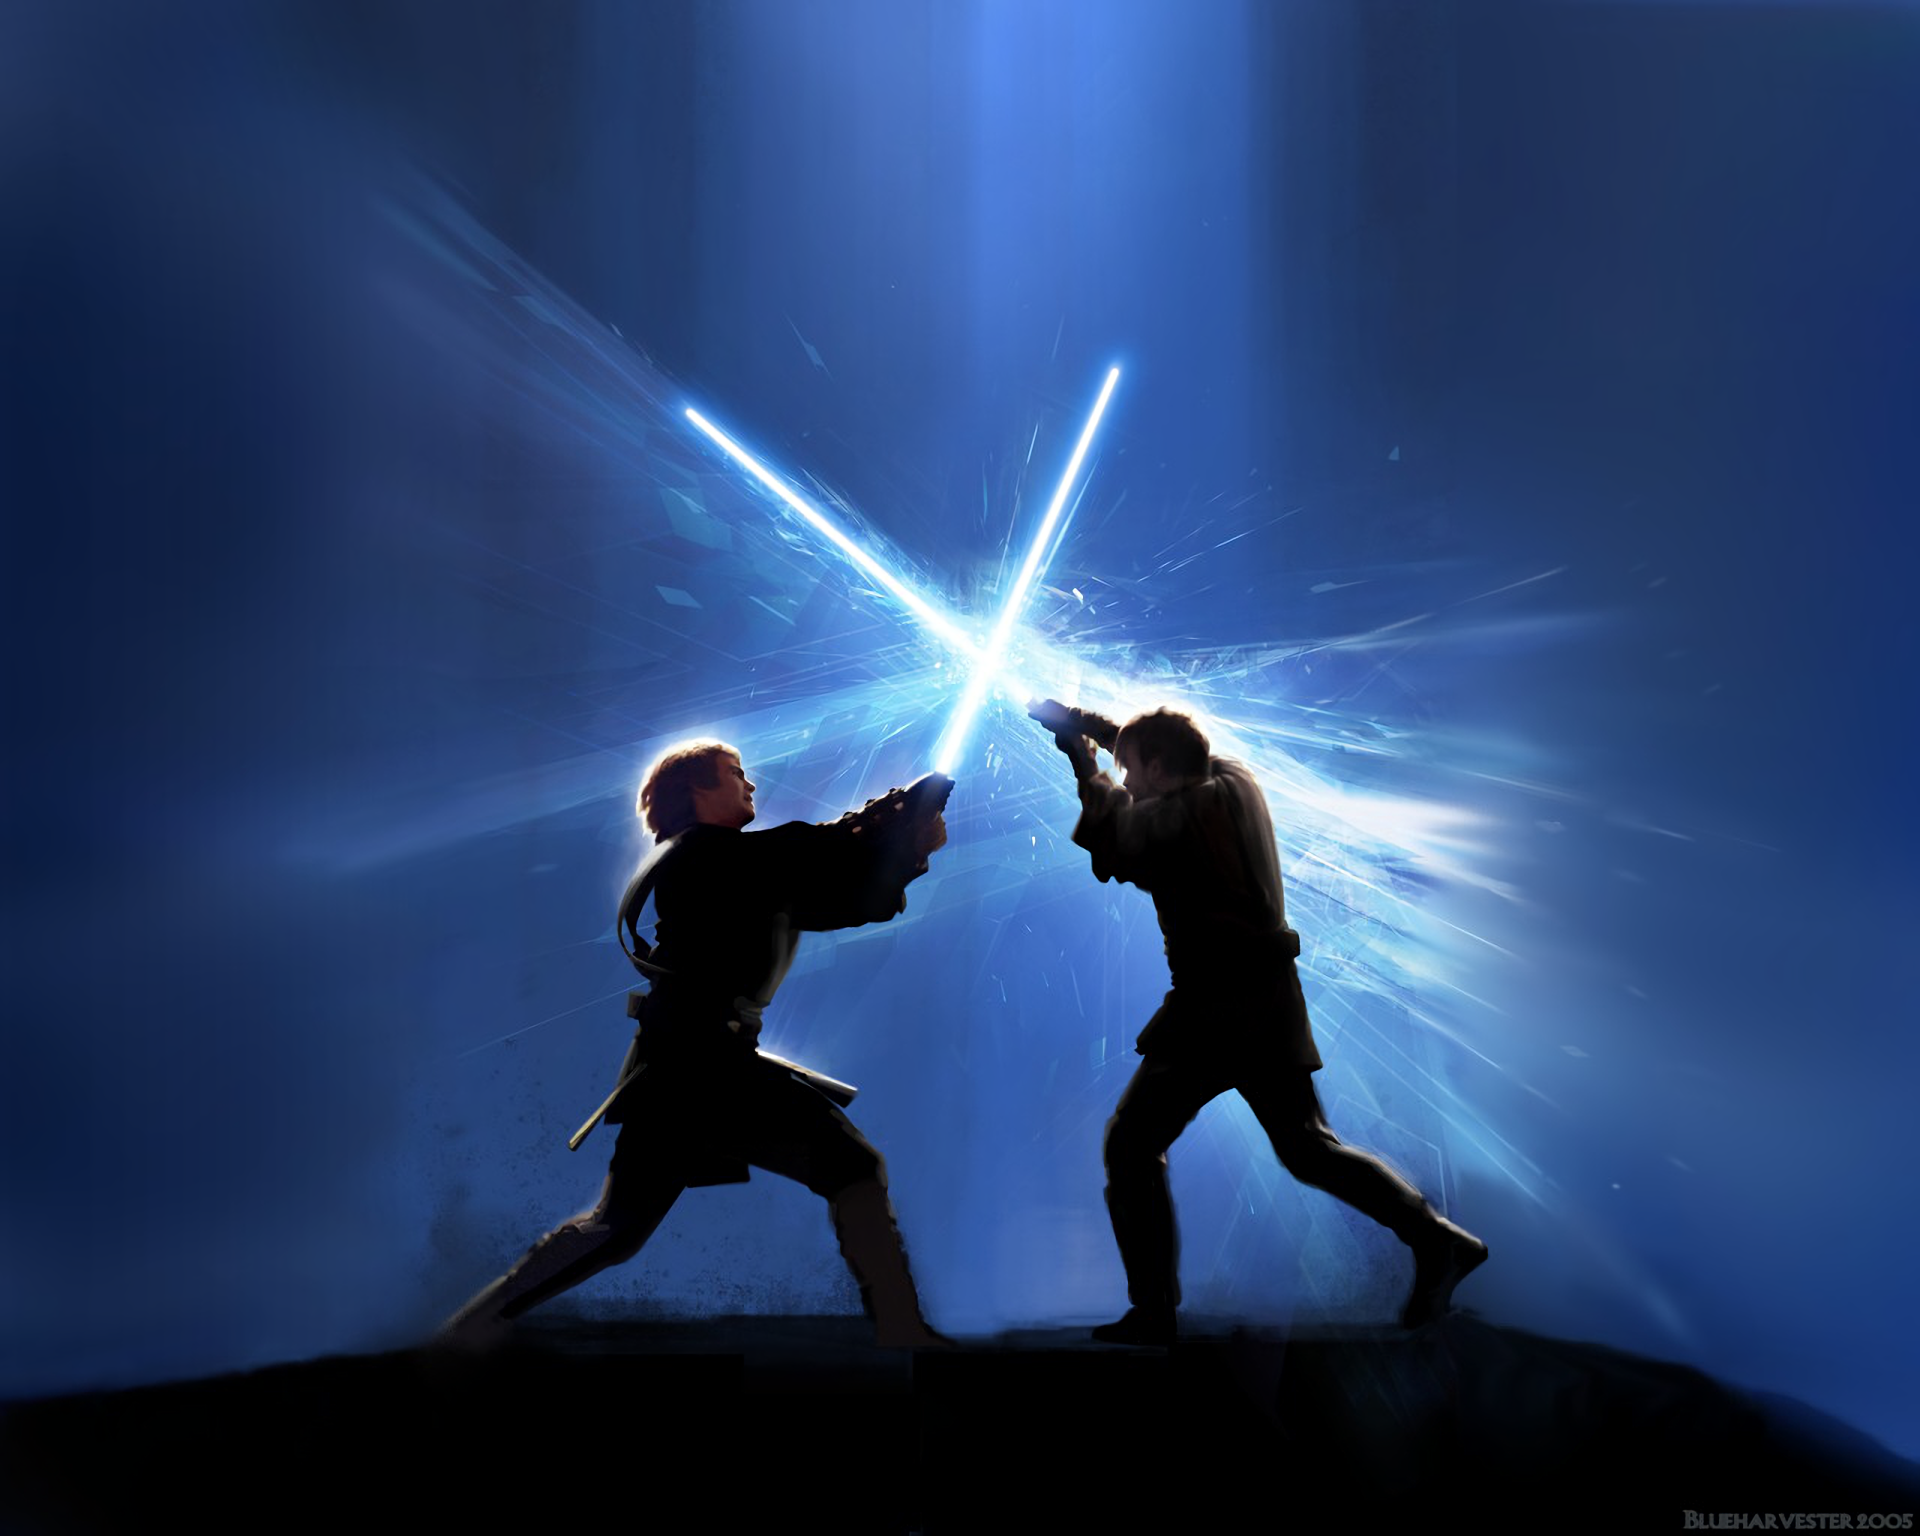 General 1920x1536 Star Wars Jedi Sith laser swords Darth Vader Anakin Skywalker lightsaber Obi-Wan Kenobi Star Wars: Episode III - The Revenge of the Sith men fighting blue background 2005 (Year) watermarked boots